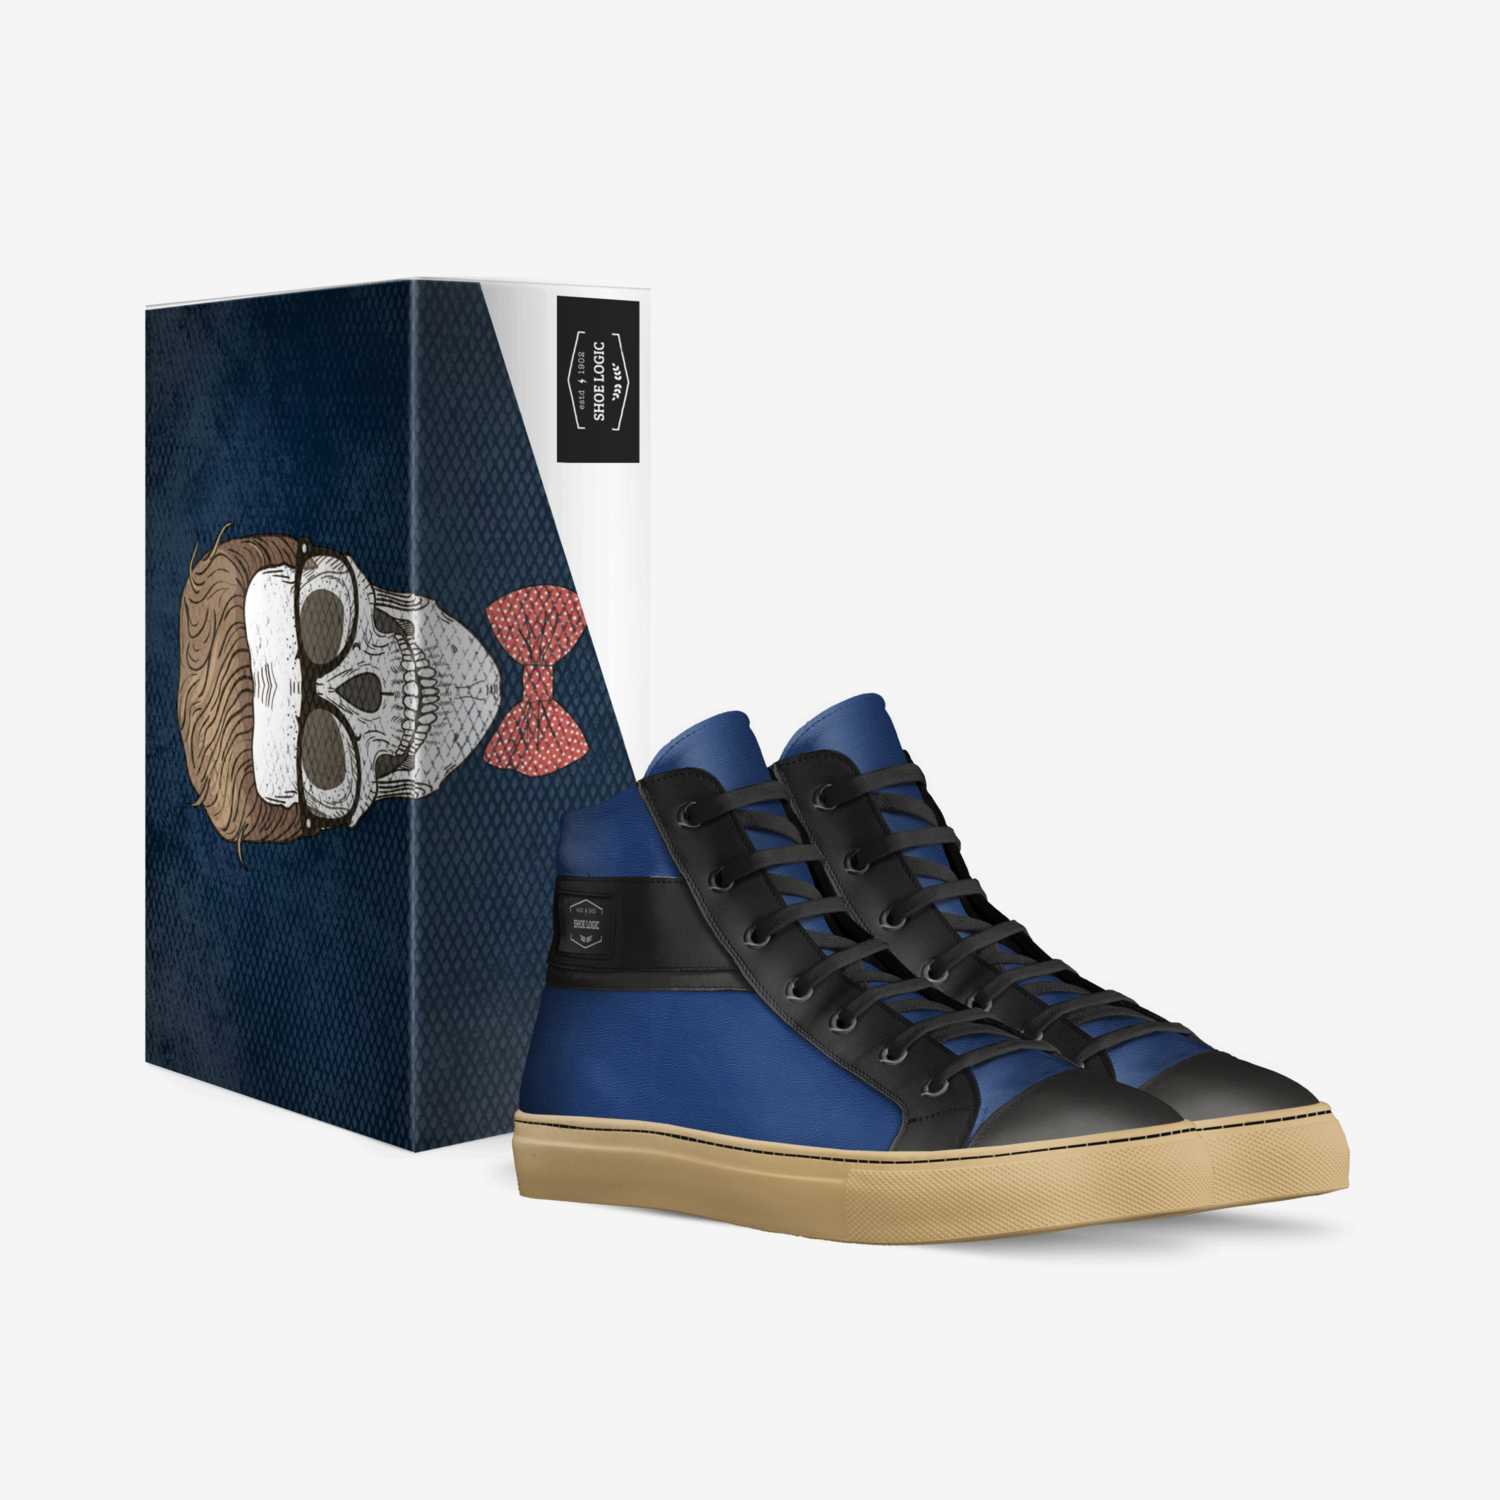 Shoe Logic custom made in Italy shoes by Matt Duffy | Box view